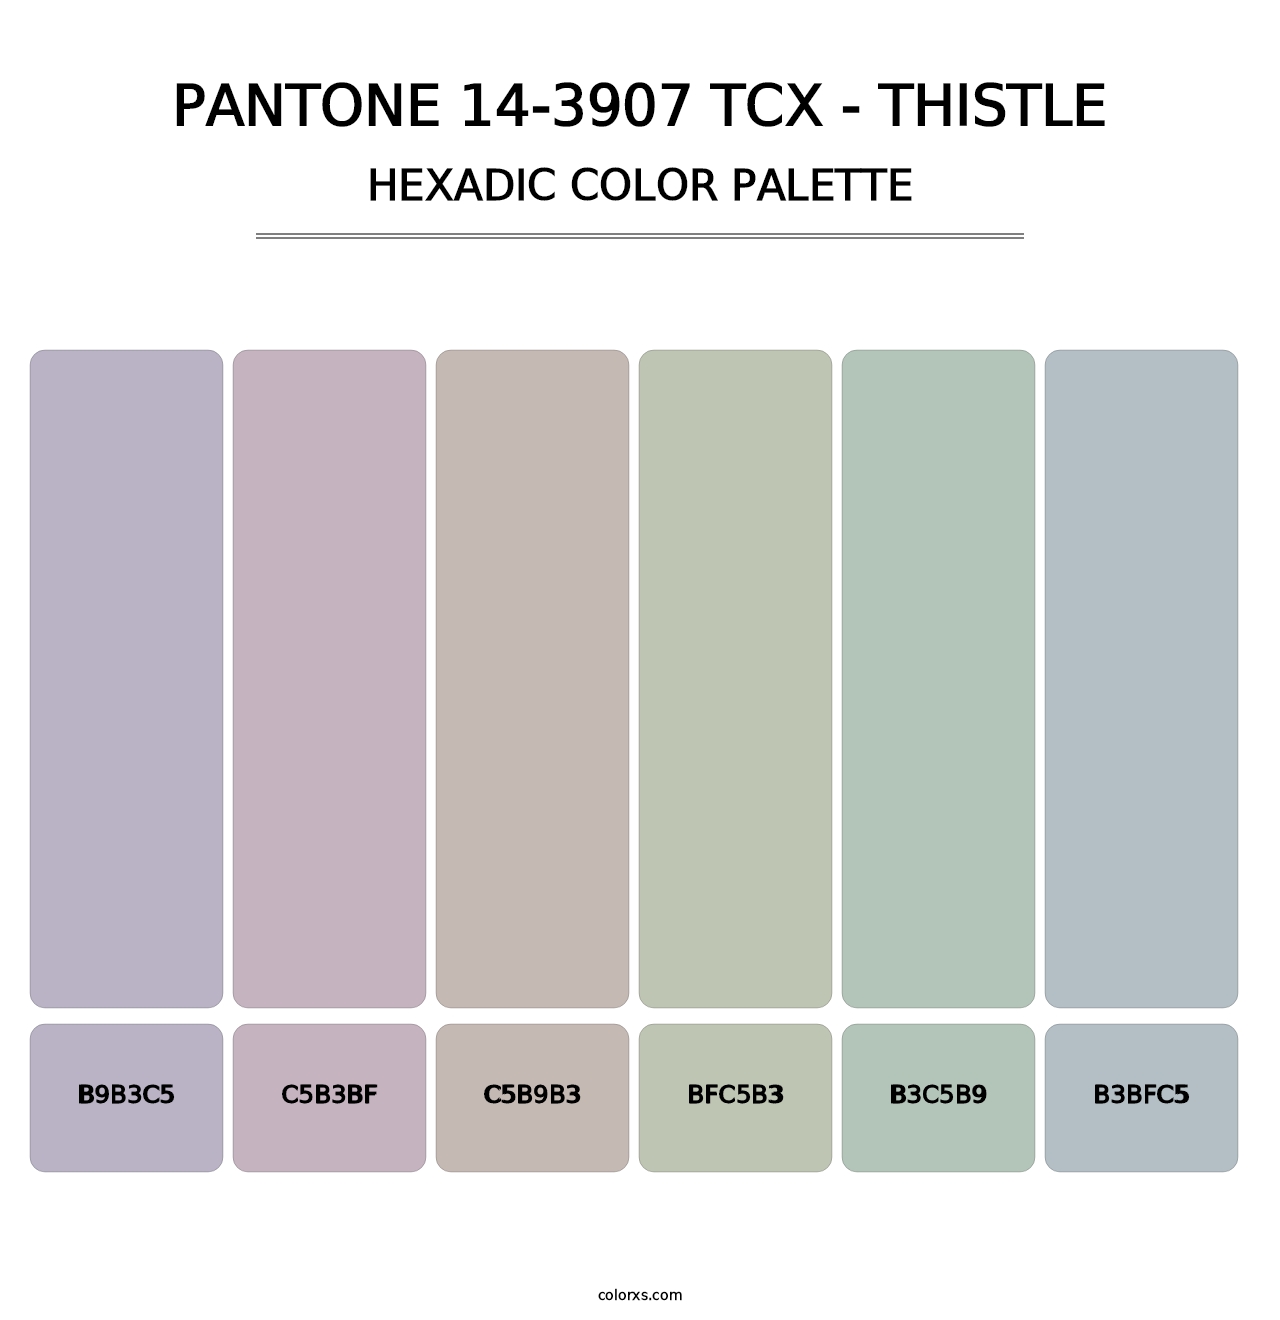 PANTONE 14-3907 TCX - Thistle - Hexadic Color Palette